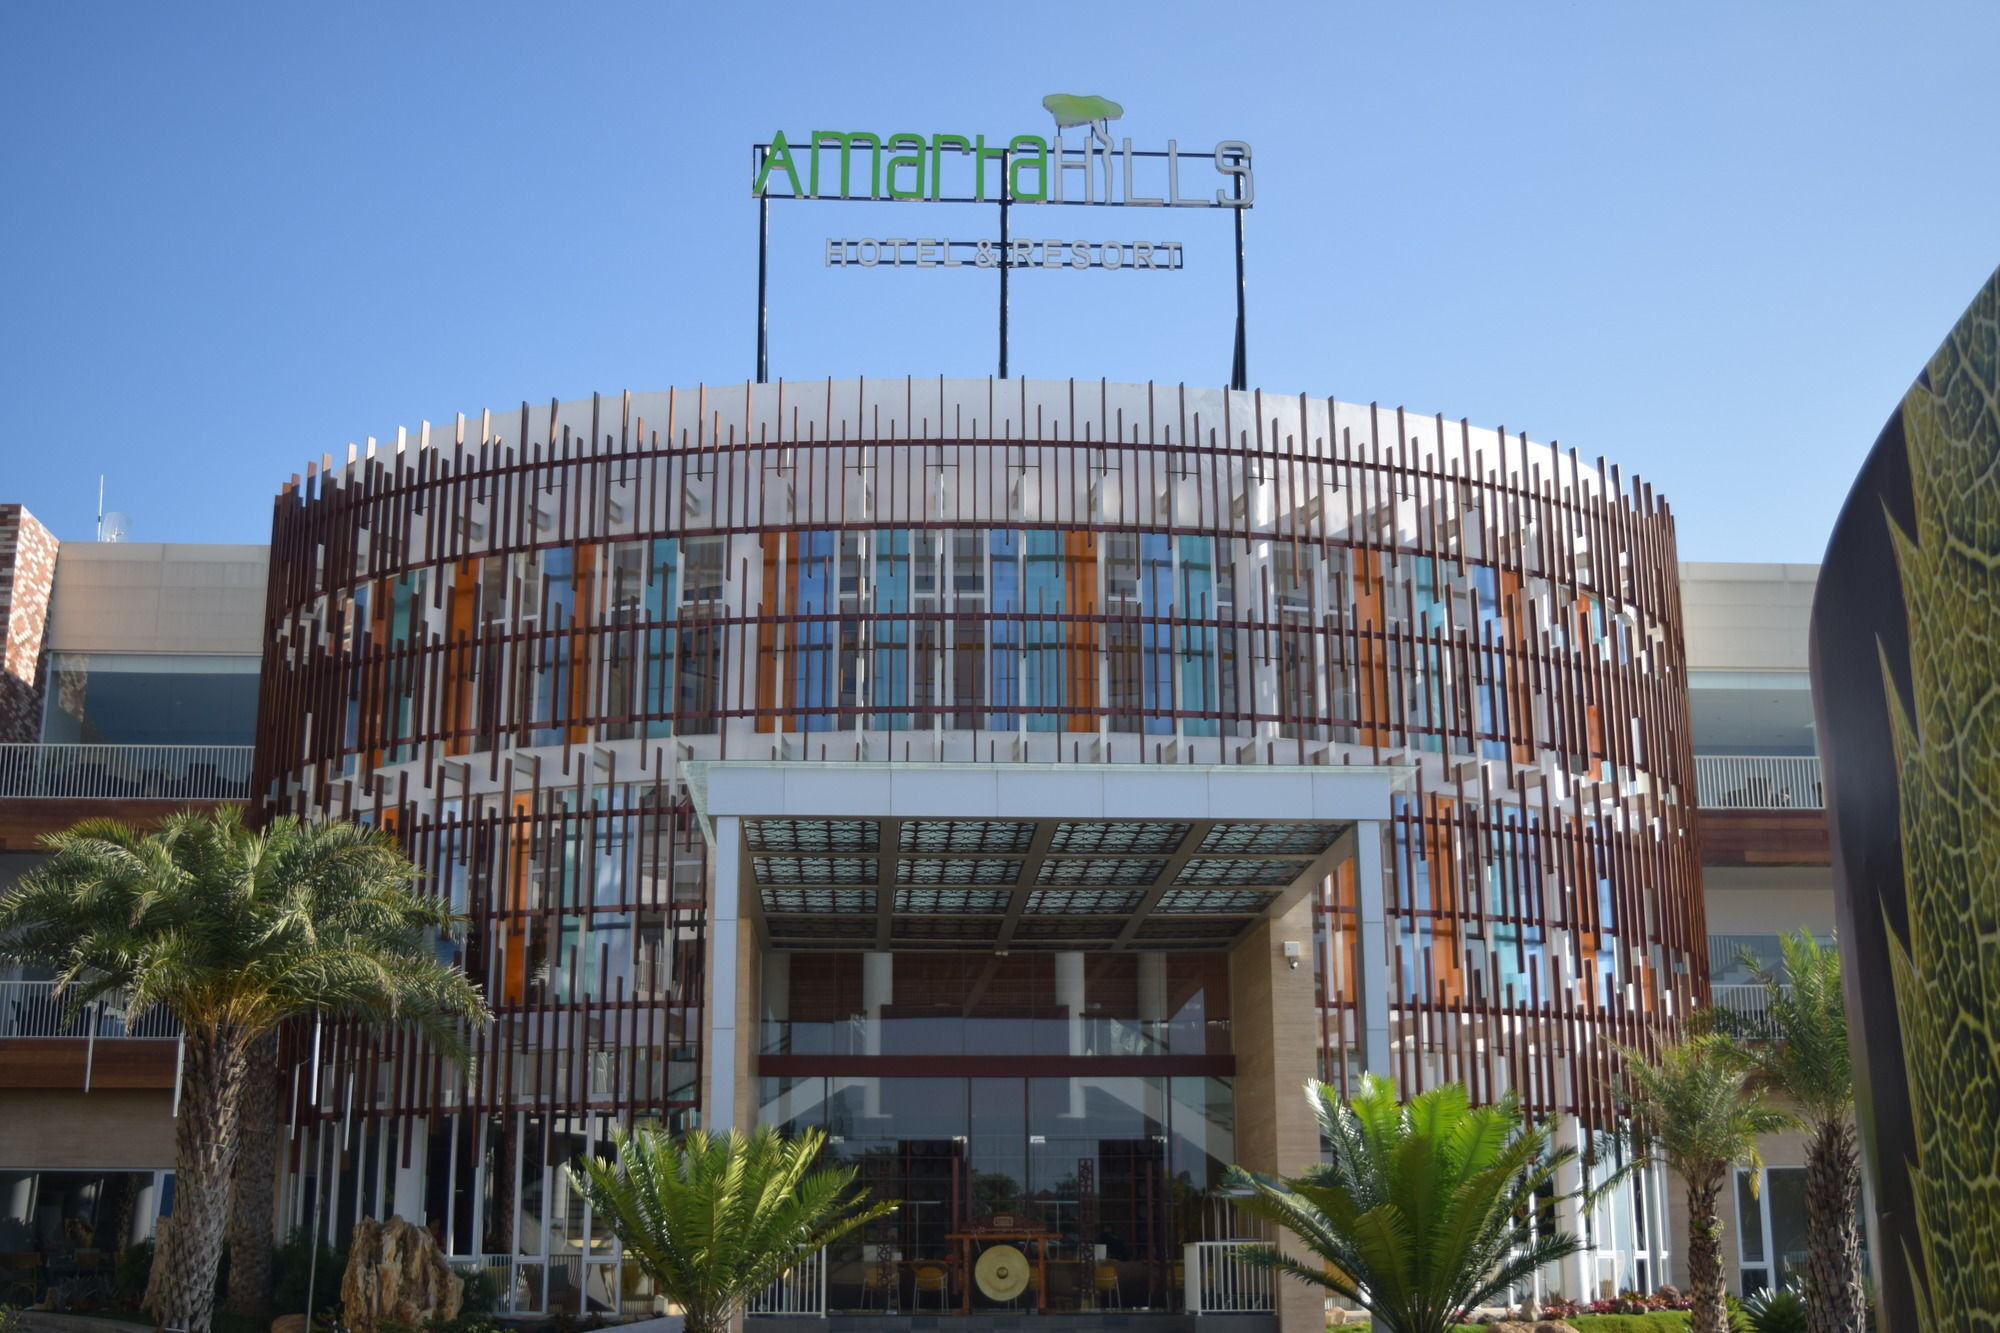 Amartahills Hotel And Resort Batu  Luaran gambar